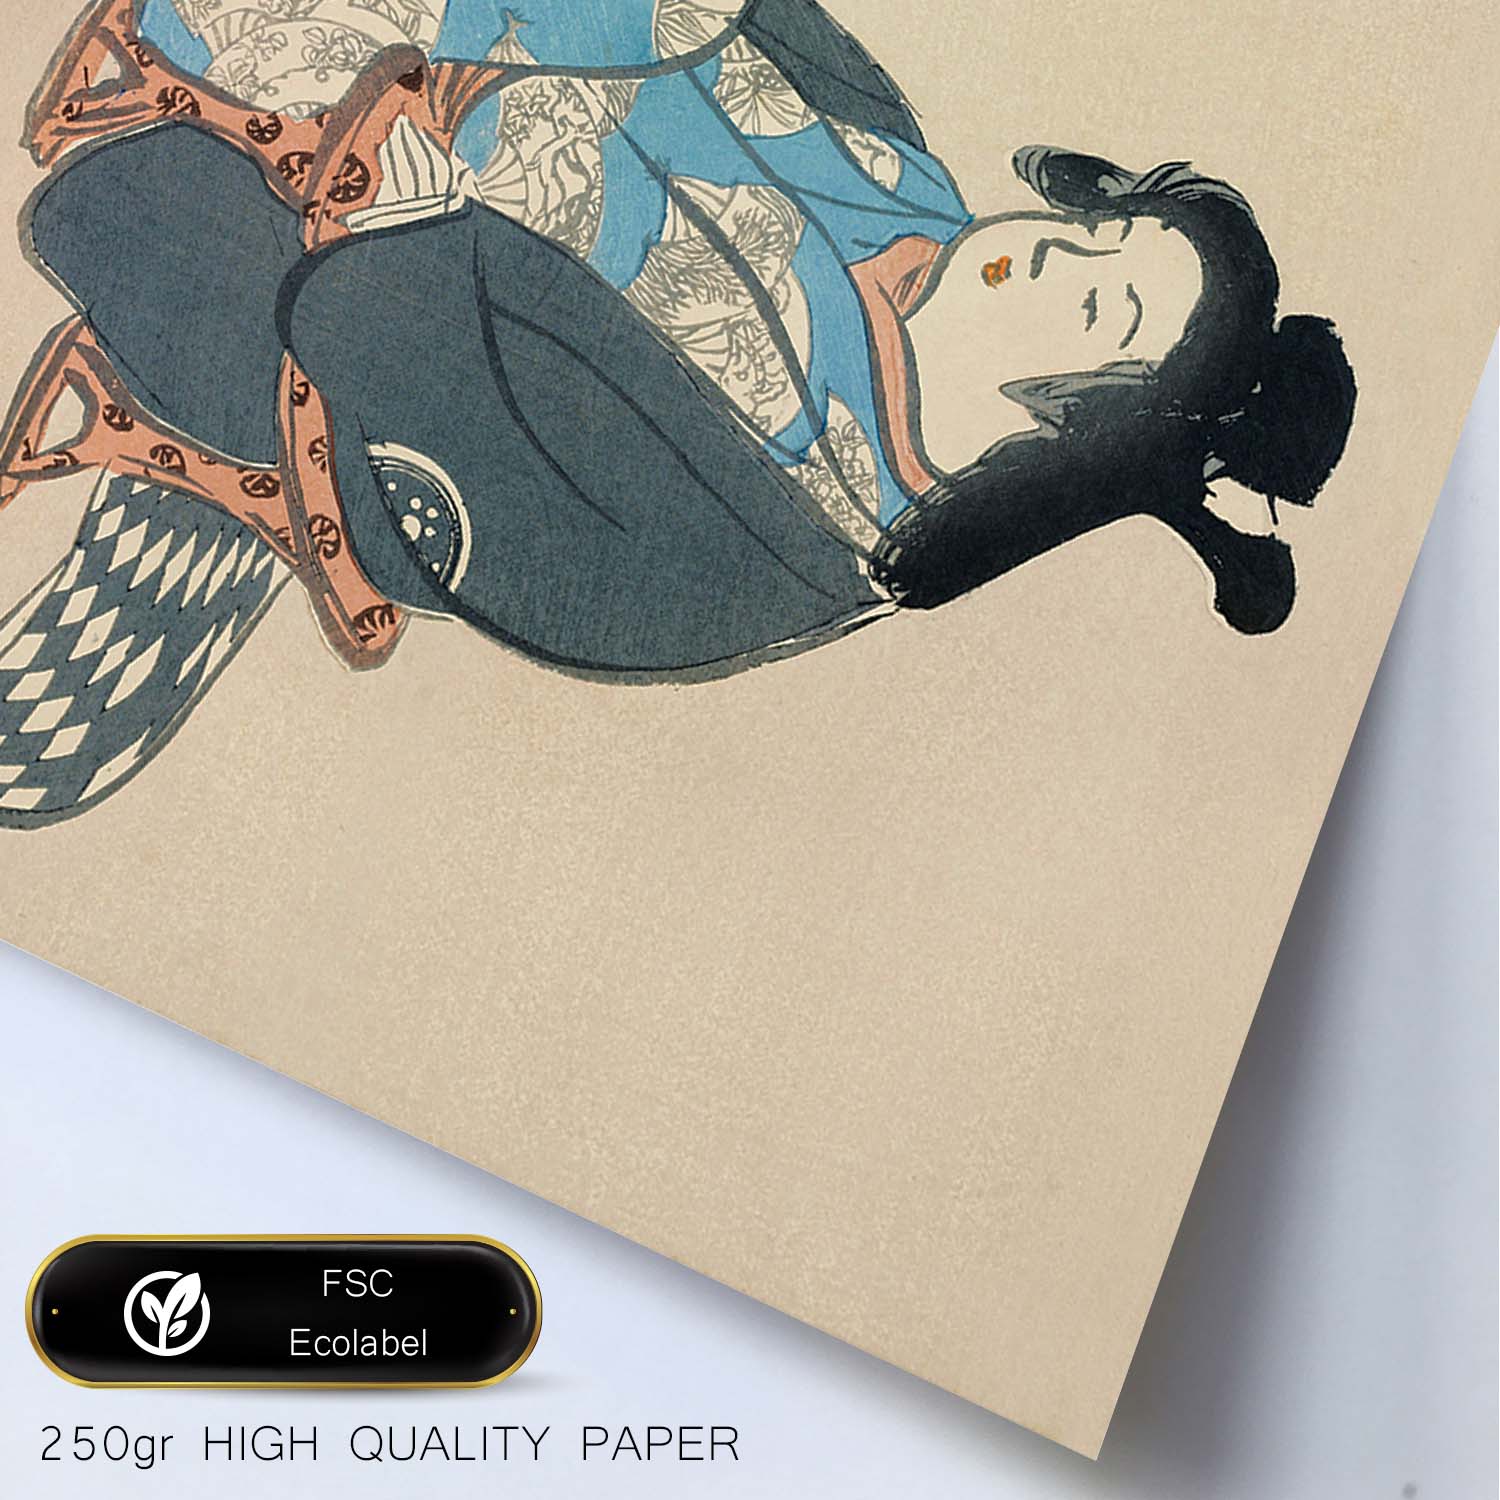 Lámina Rinpa 13. Pósters con llamativas ilustraciones Rinpa del artista japonés Kamisaka Sekka.-Artwork-Nacnic-Nacnic Estudio SL